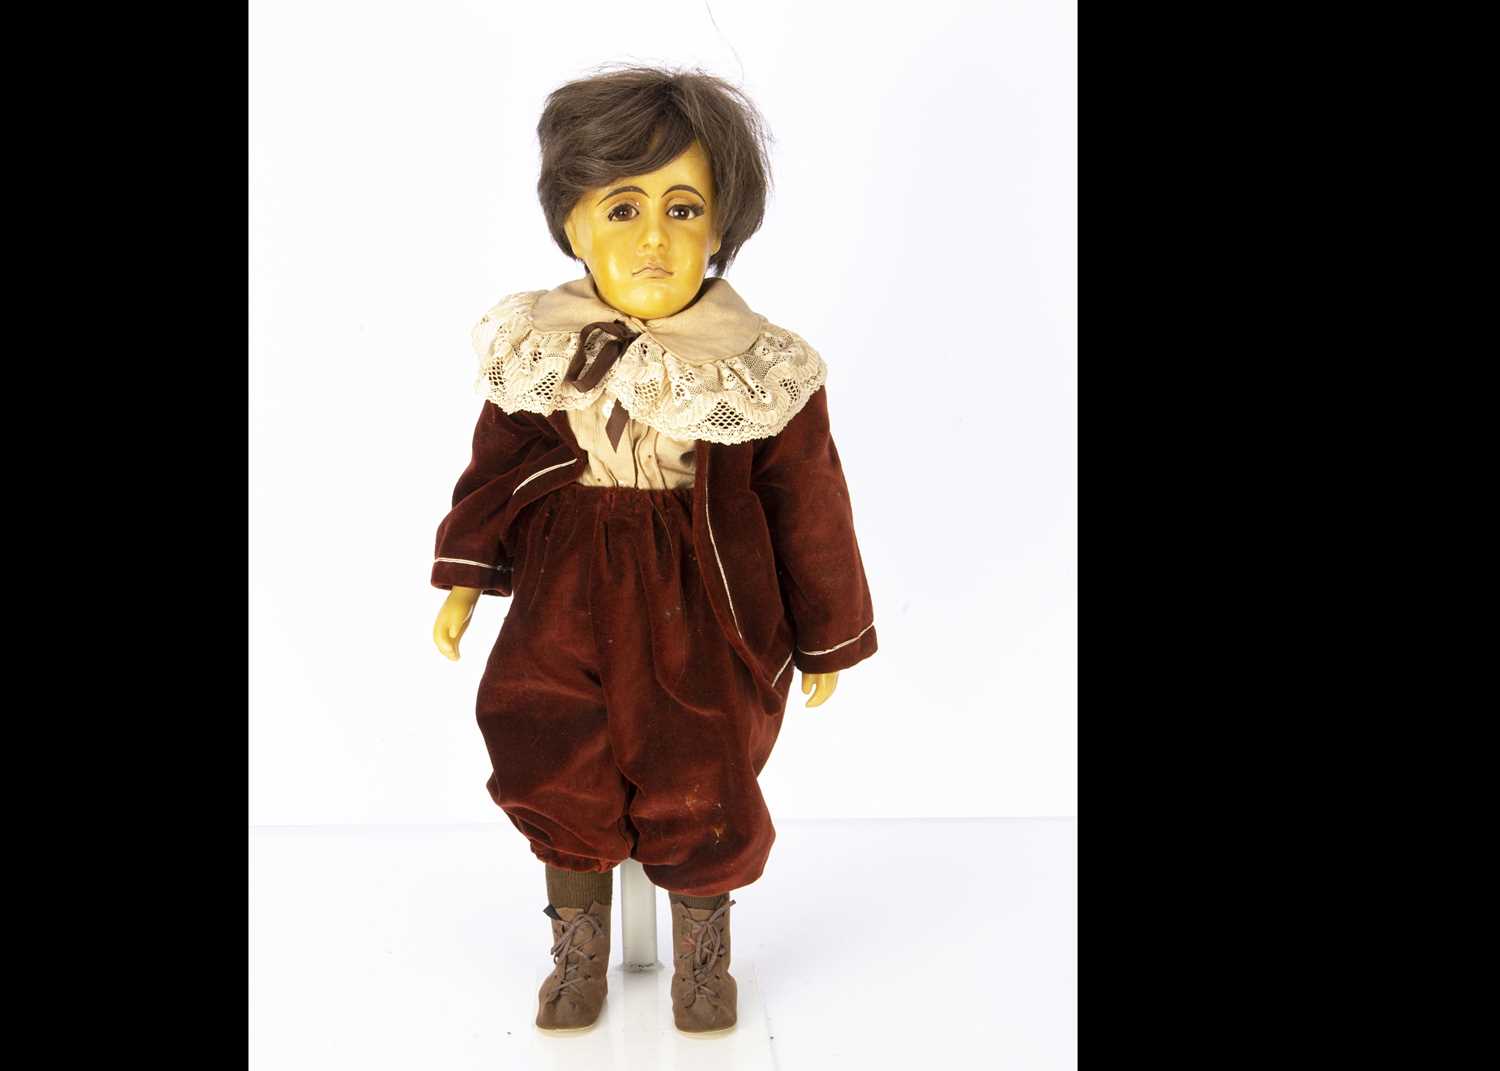 An artist wax boy doll by Gillie Charlson 1977,